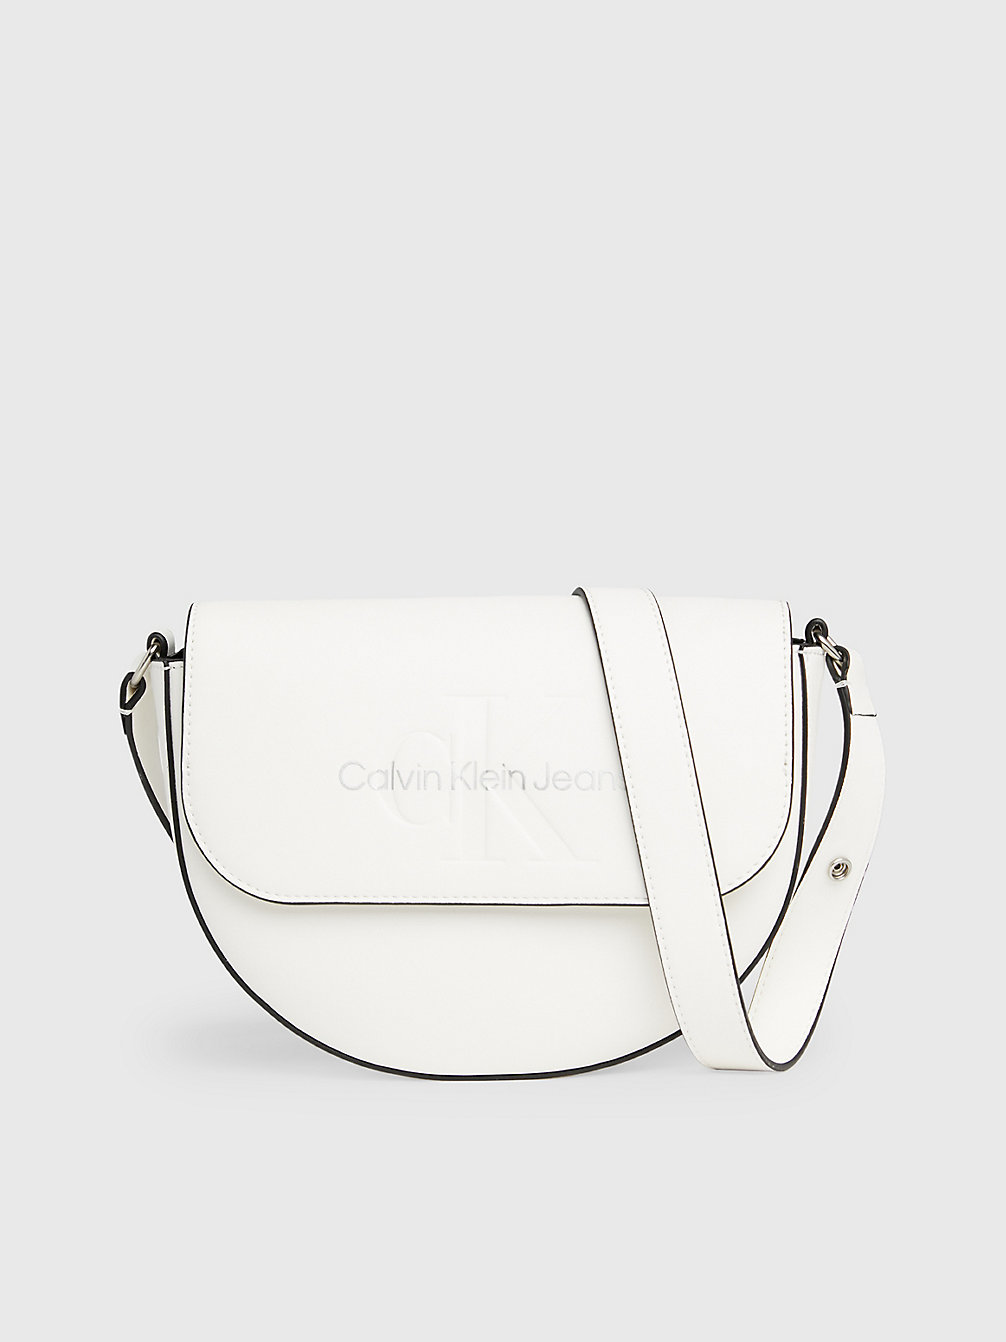 WHITE/SILVER LOGO Crossbody Bag undefined Women Calvin Klein